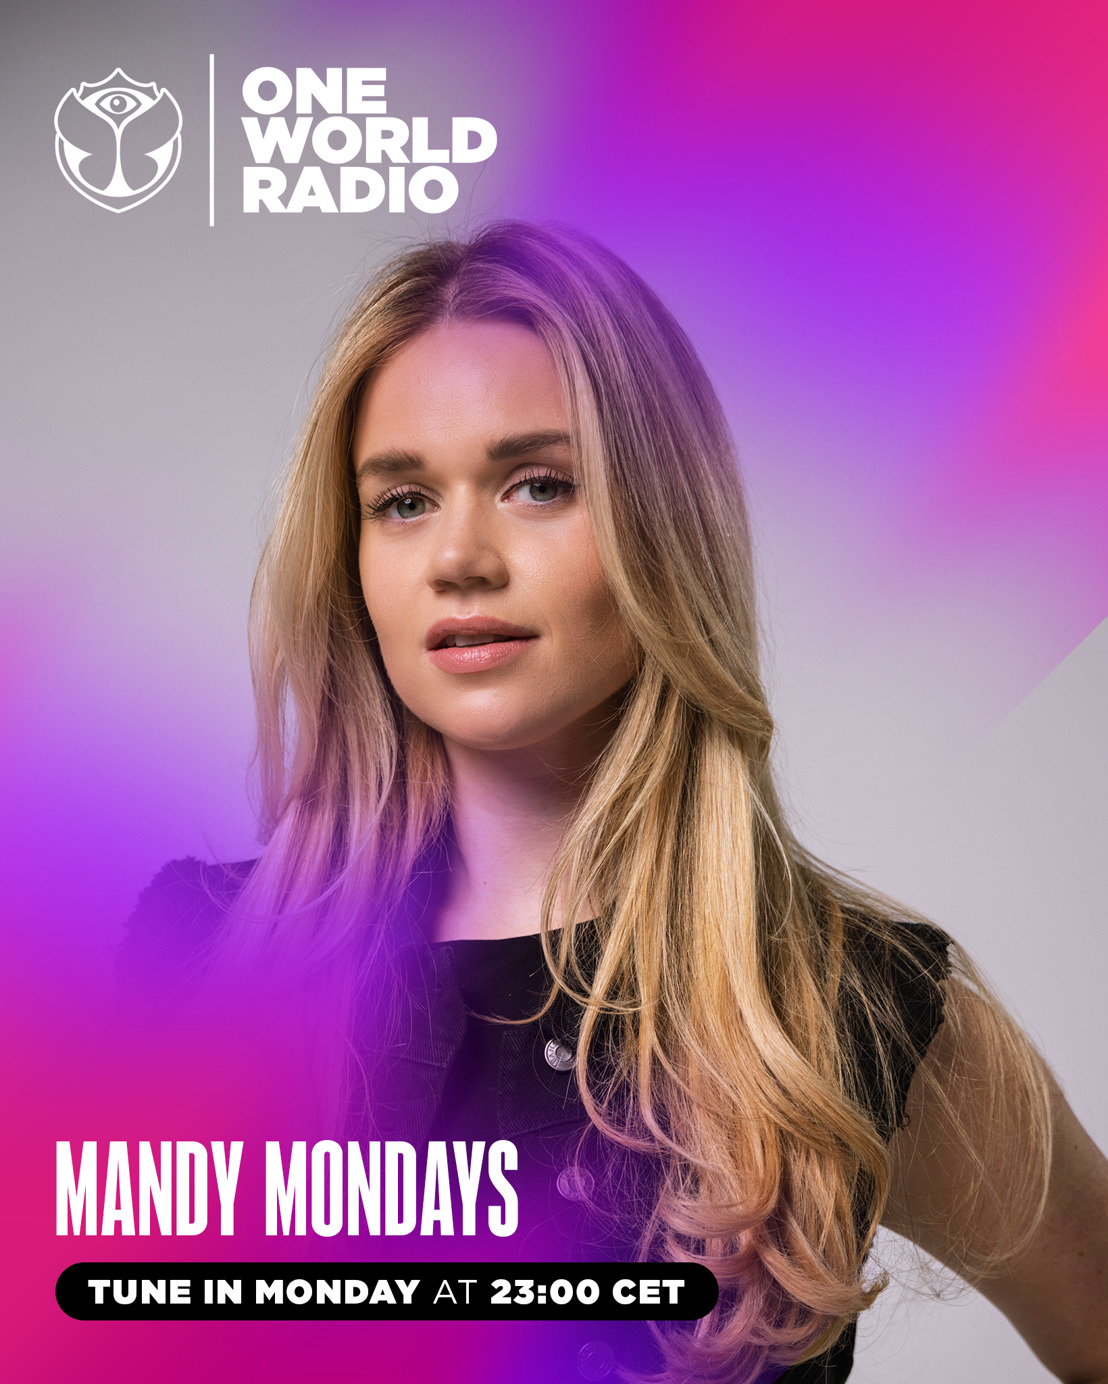 MANDY kicks off her own show ‘MANDY Mondays’ on One World Radio